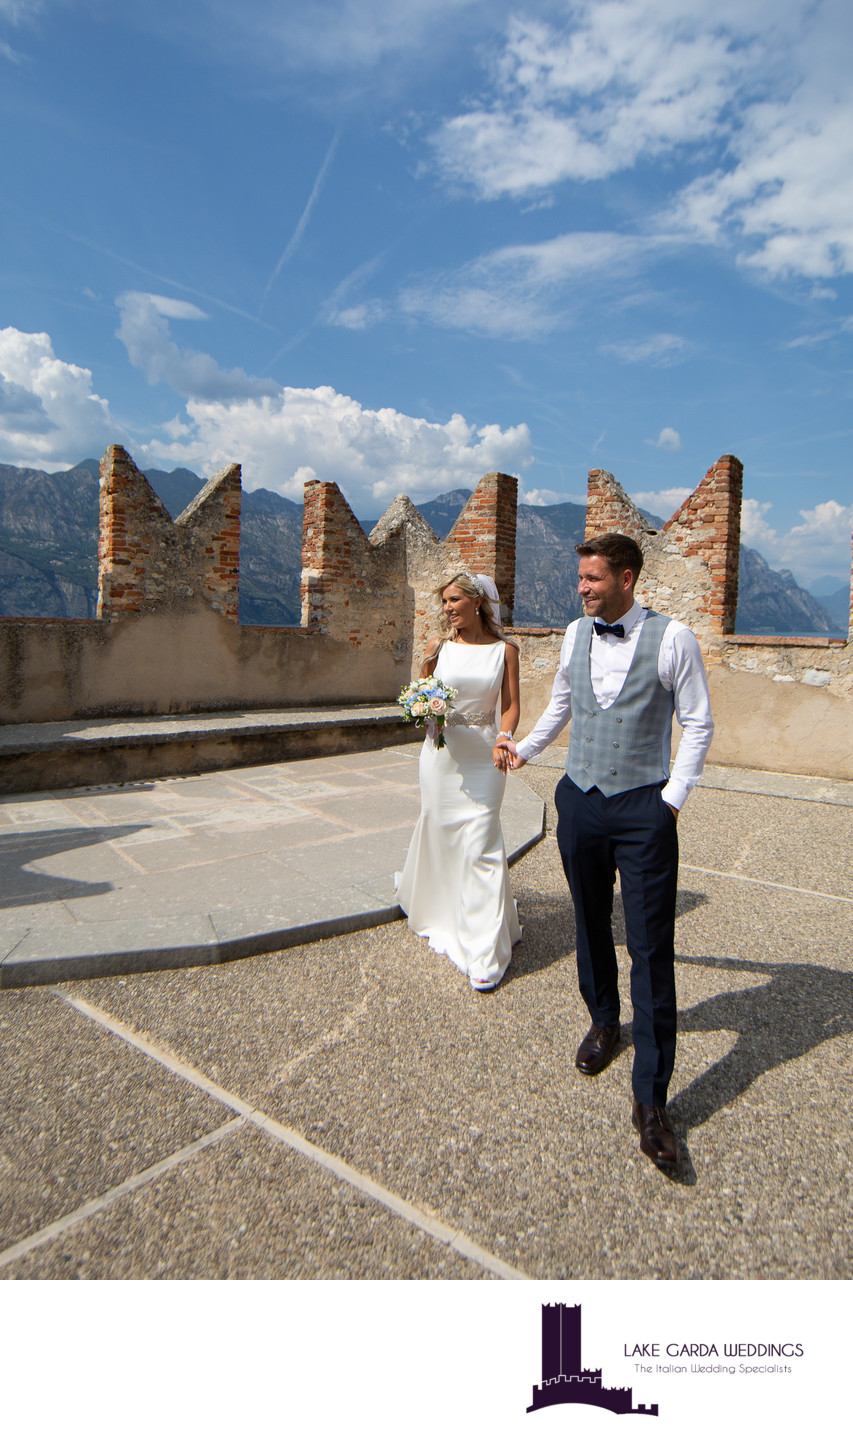 Divine weddings in Italy in Malcesine Castle.